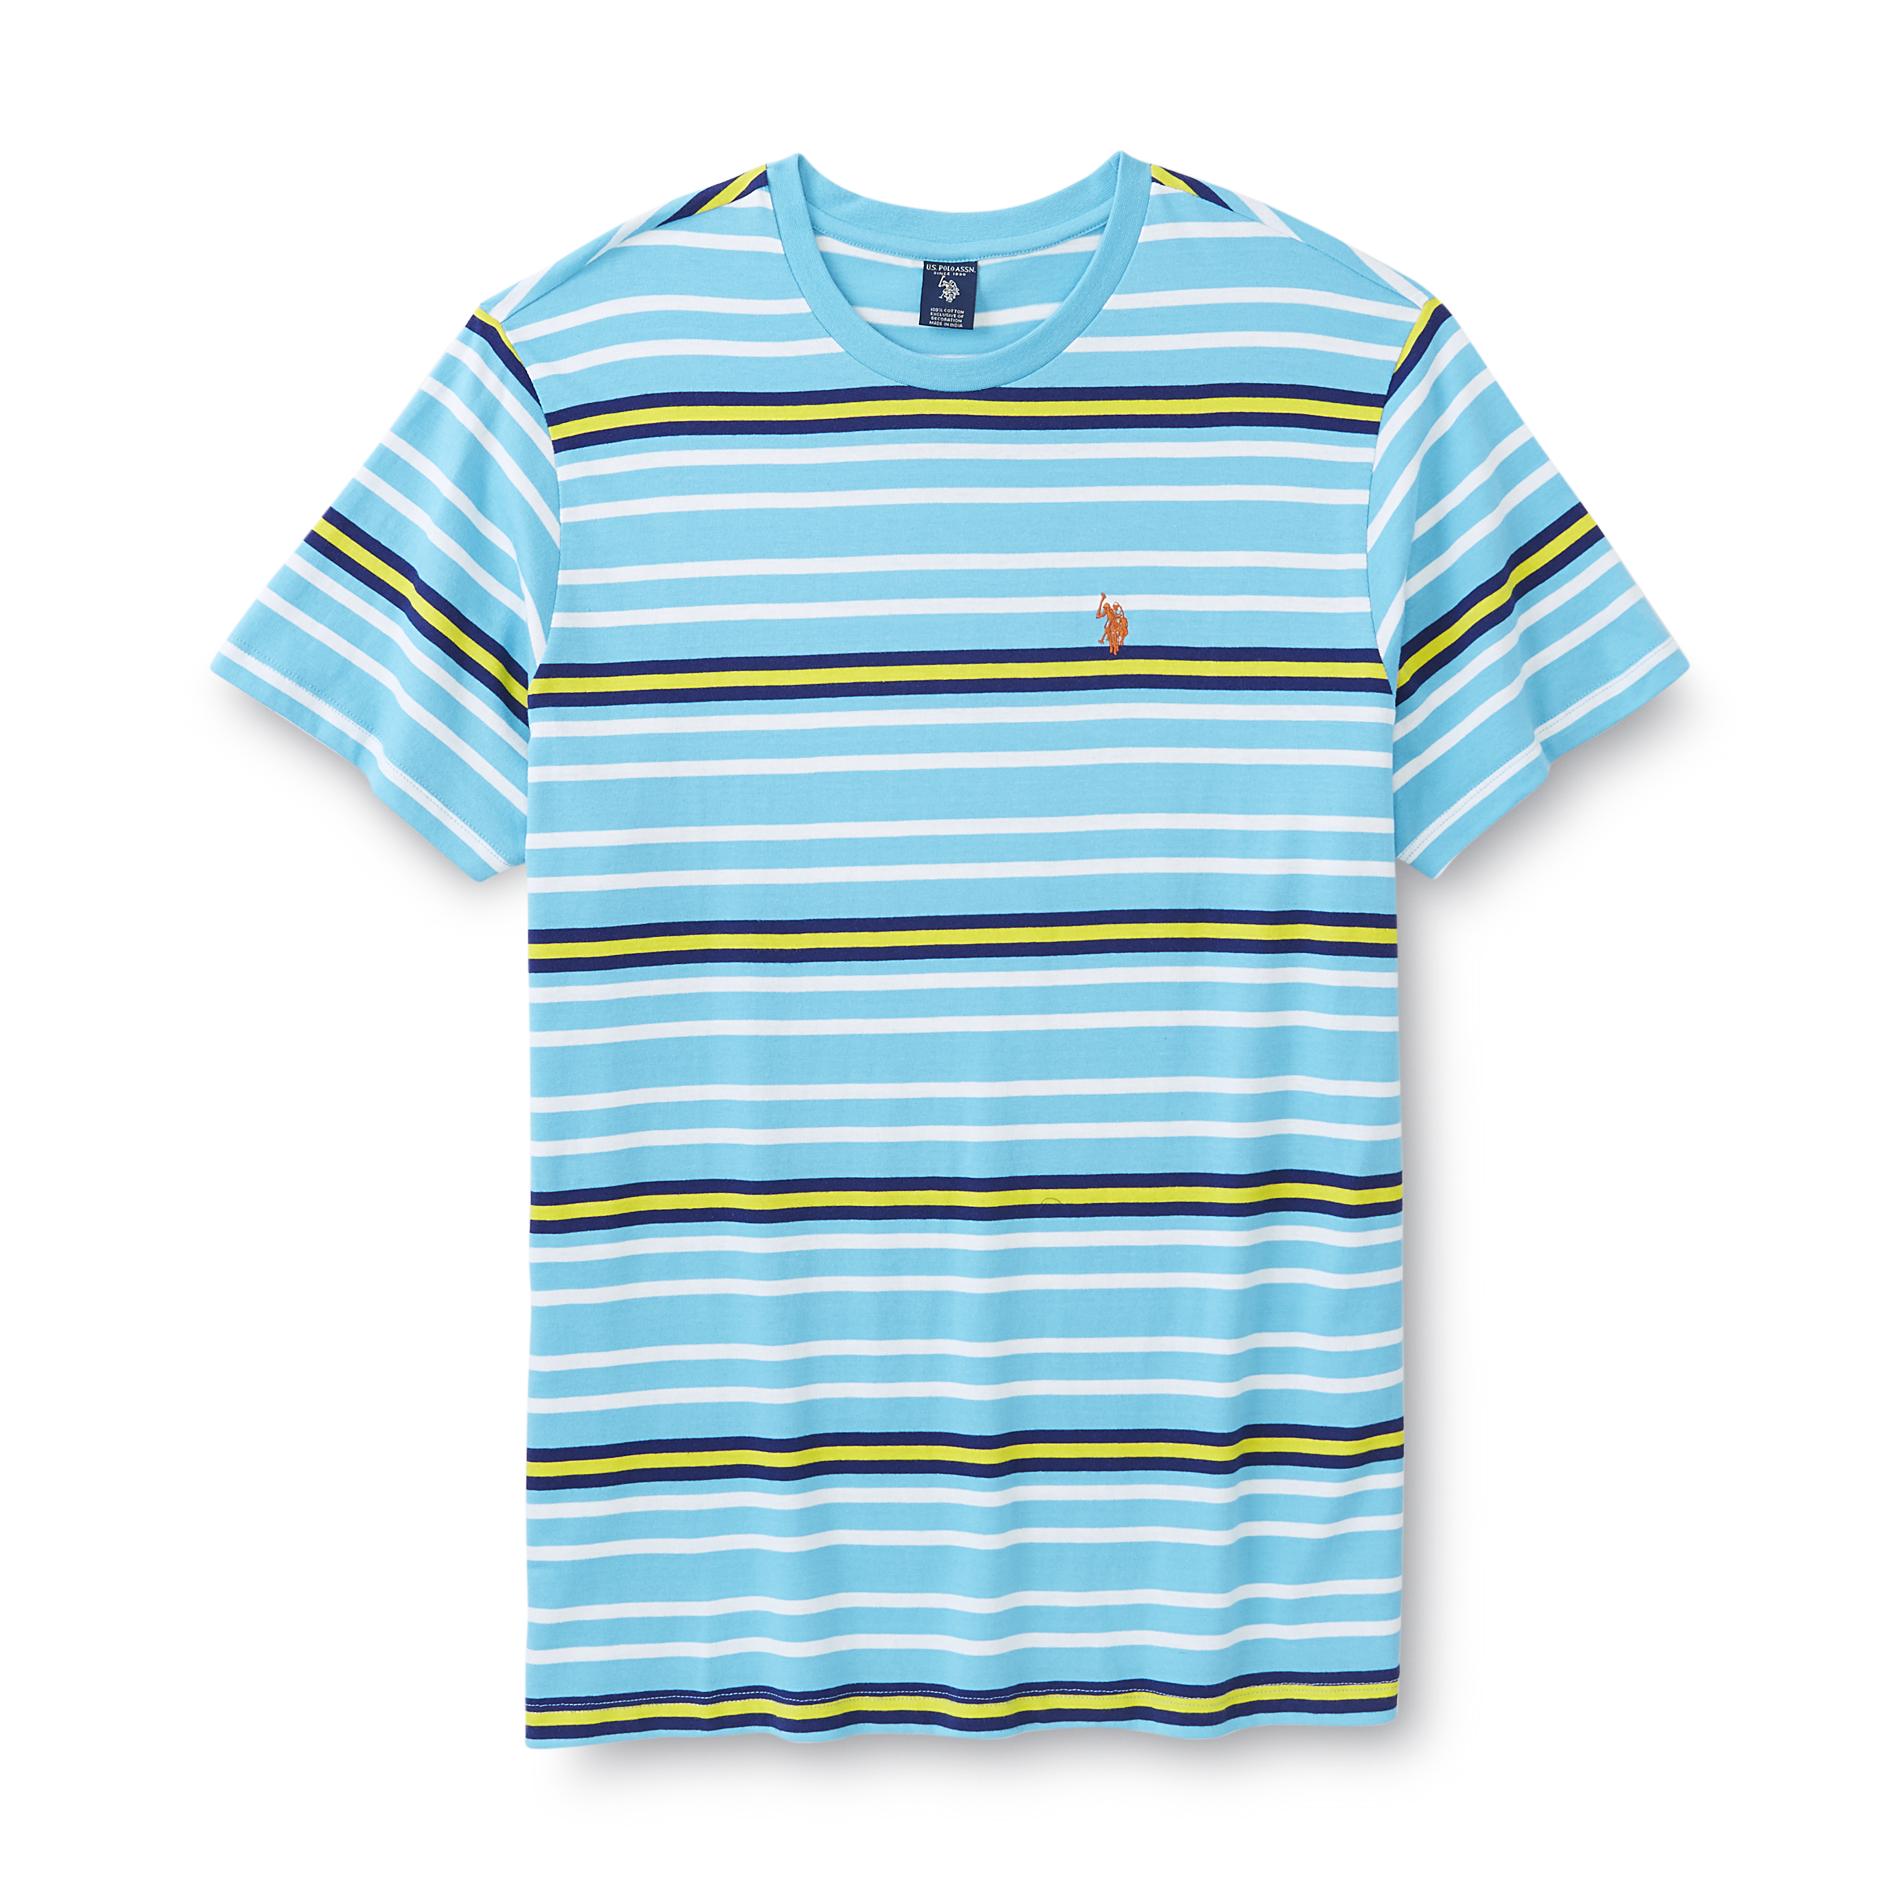 U.S. Polo Assn. Men's Crew Neck T-Shirt - Striped